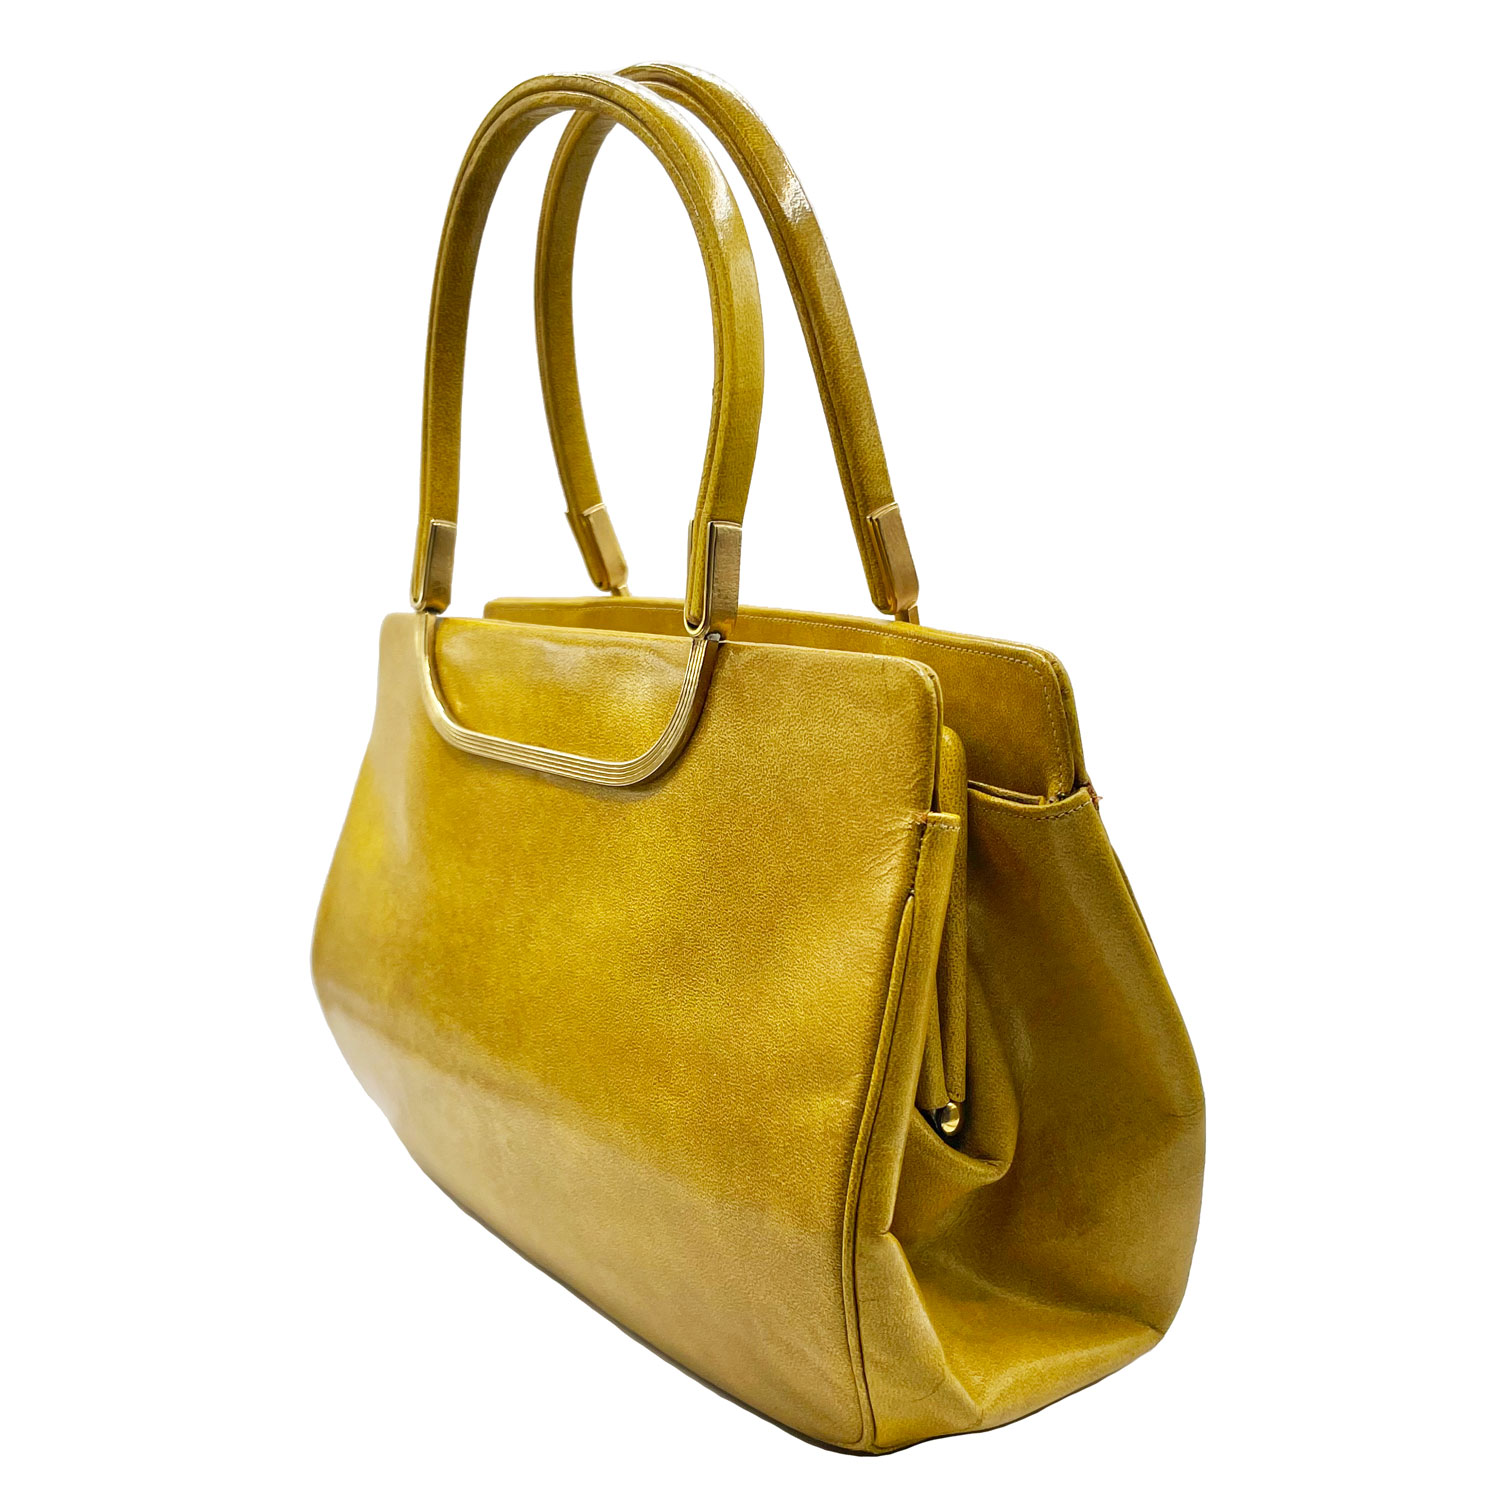 1960s mustard yellow leather purse